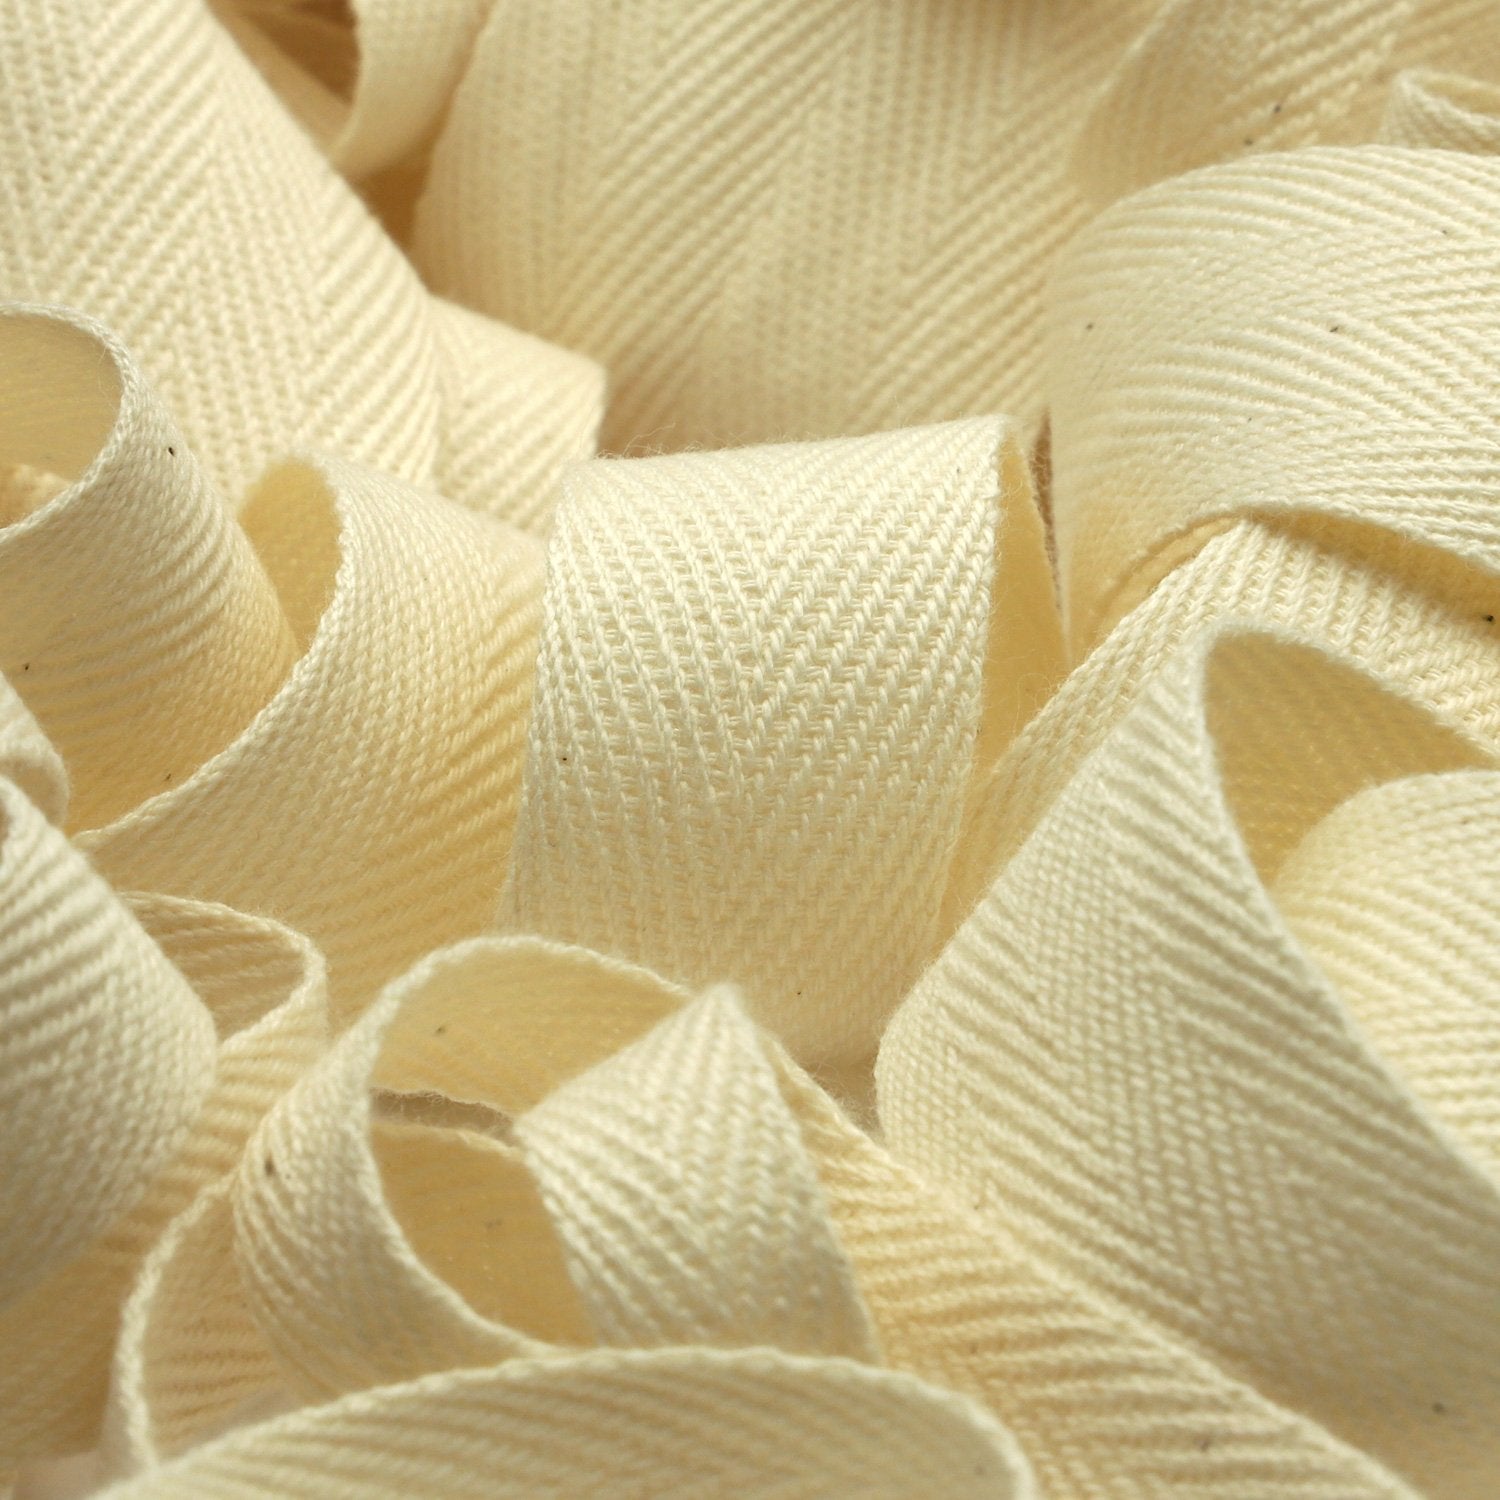 FUJIYAMA RIBBON Organic Cotton Herringbone Ribbon 15mm Ecru 9.14 Meters Roll